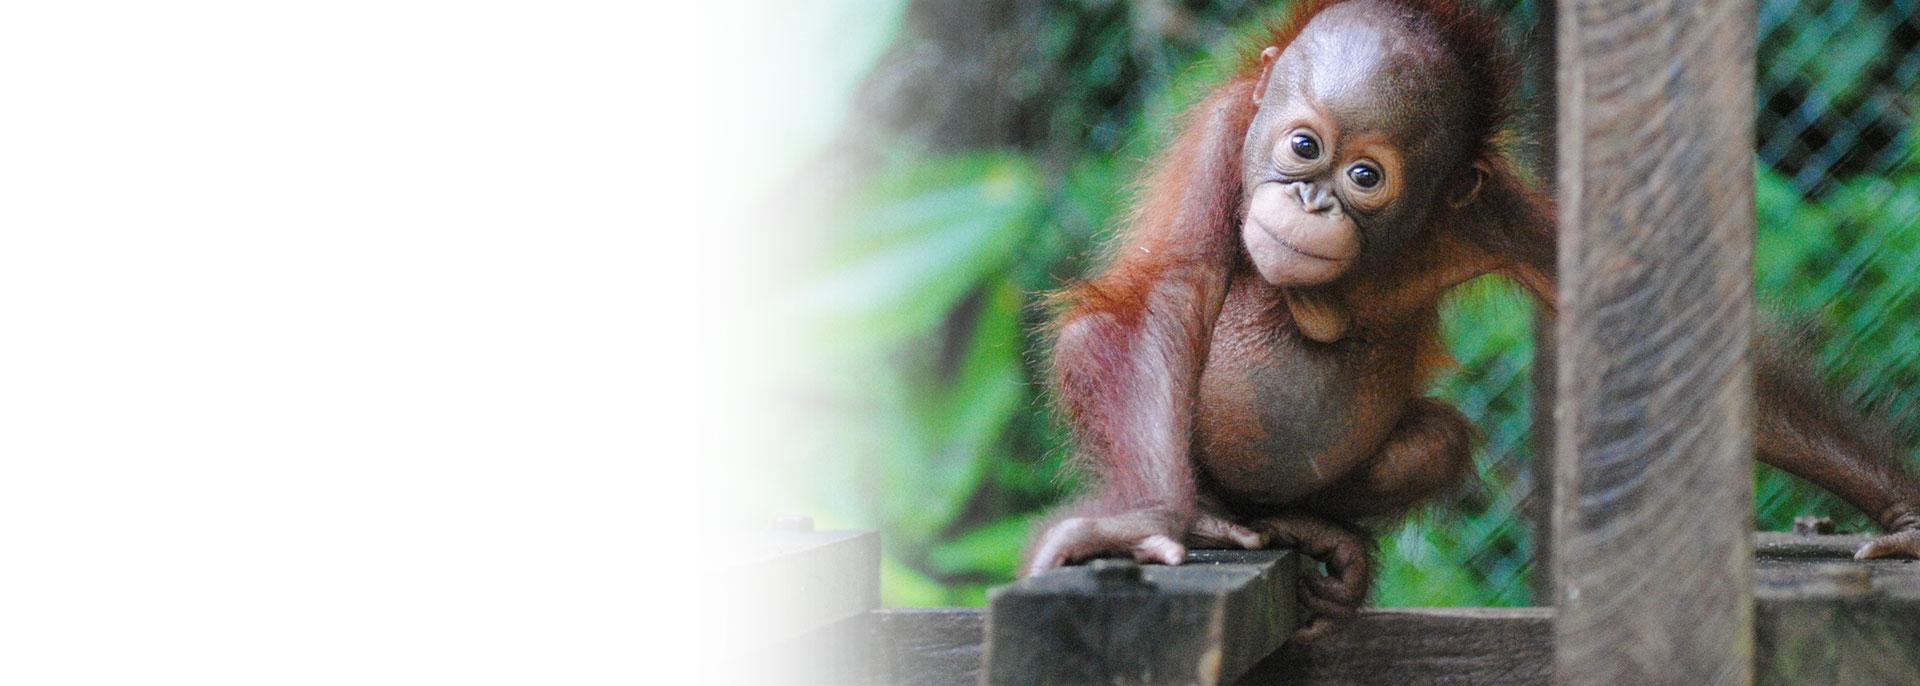 The Great Orangutan Project - 15% Off